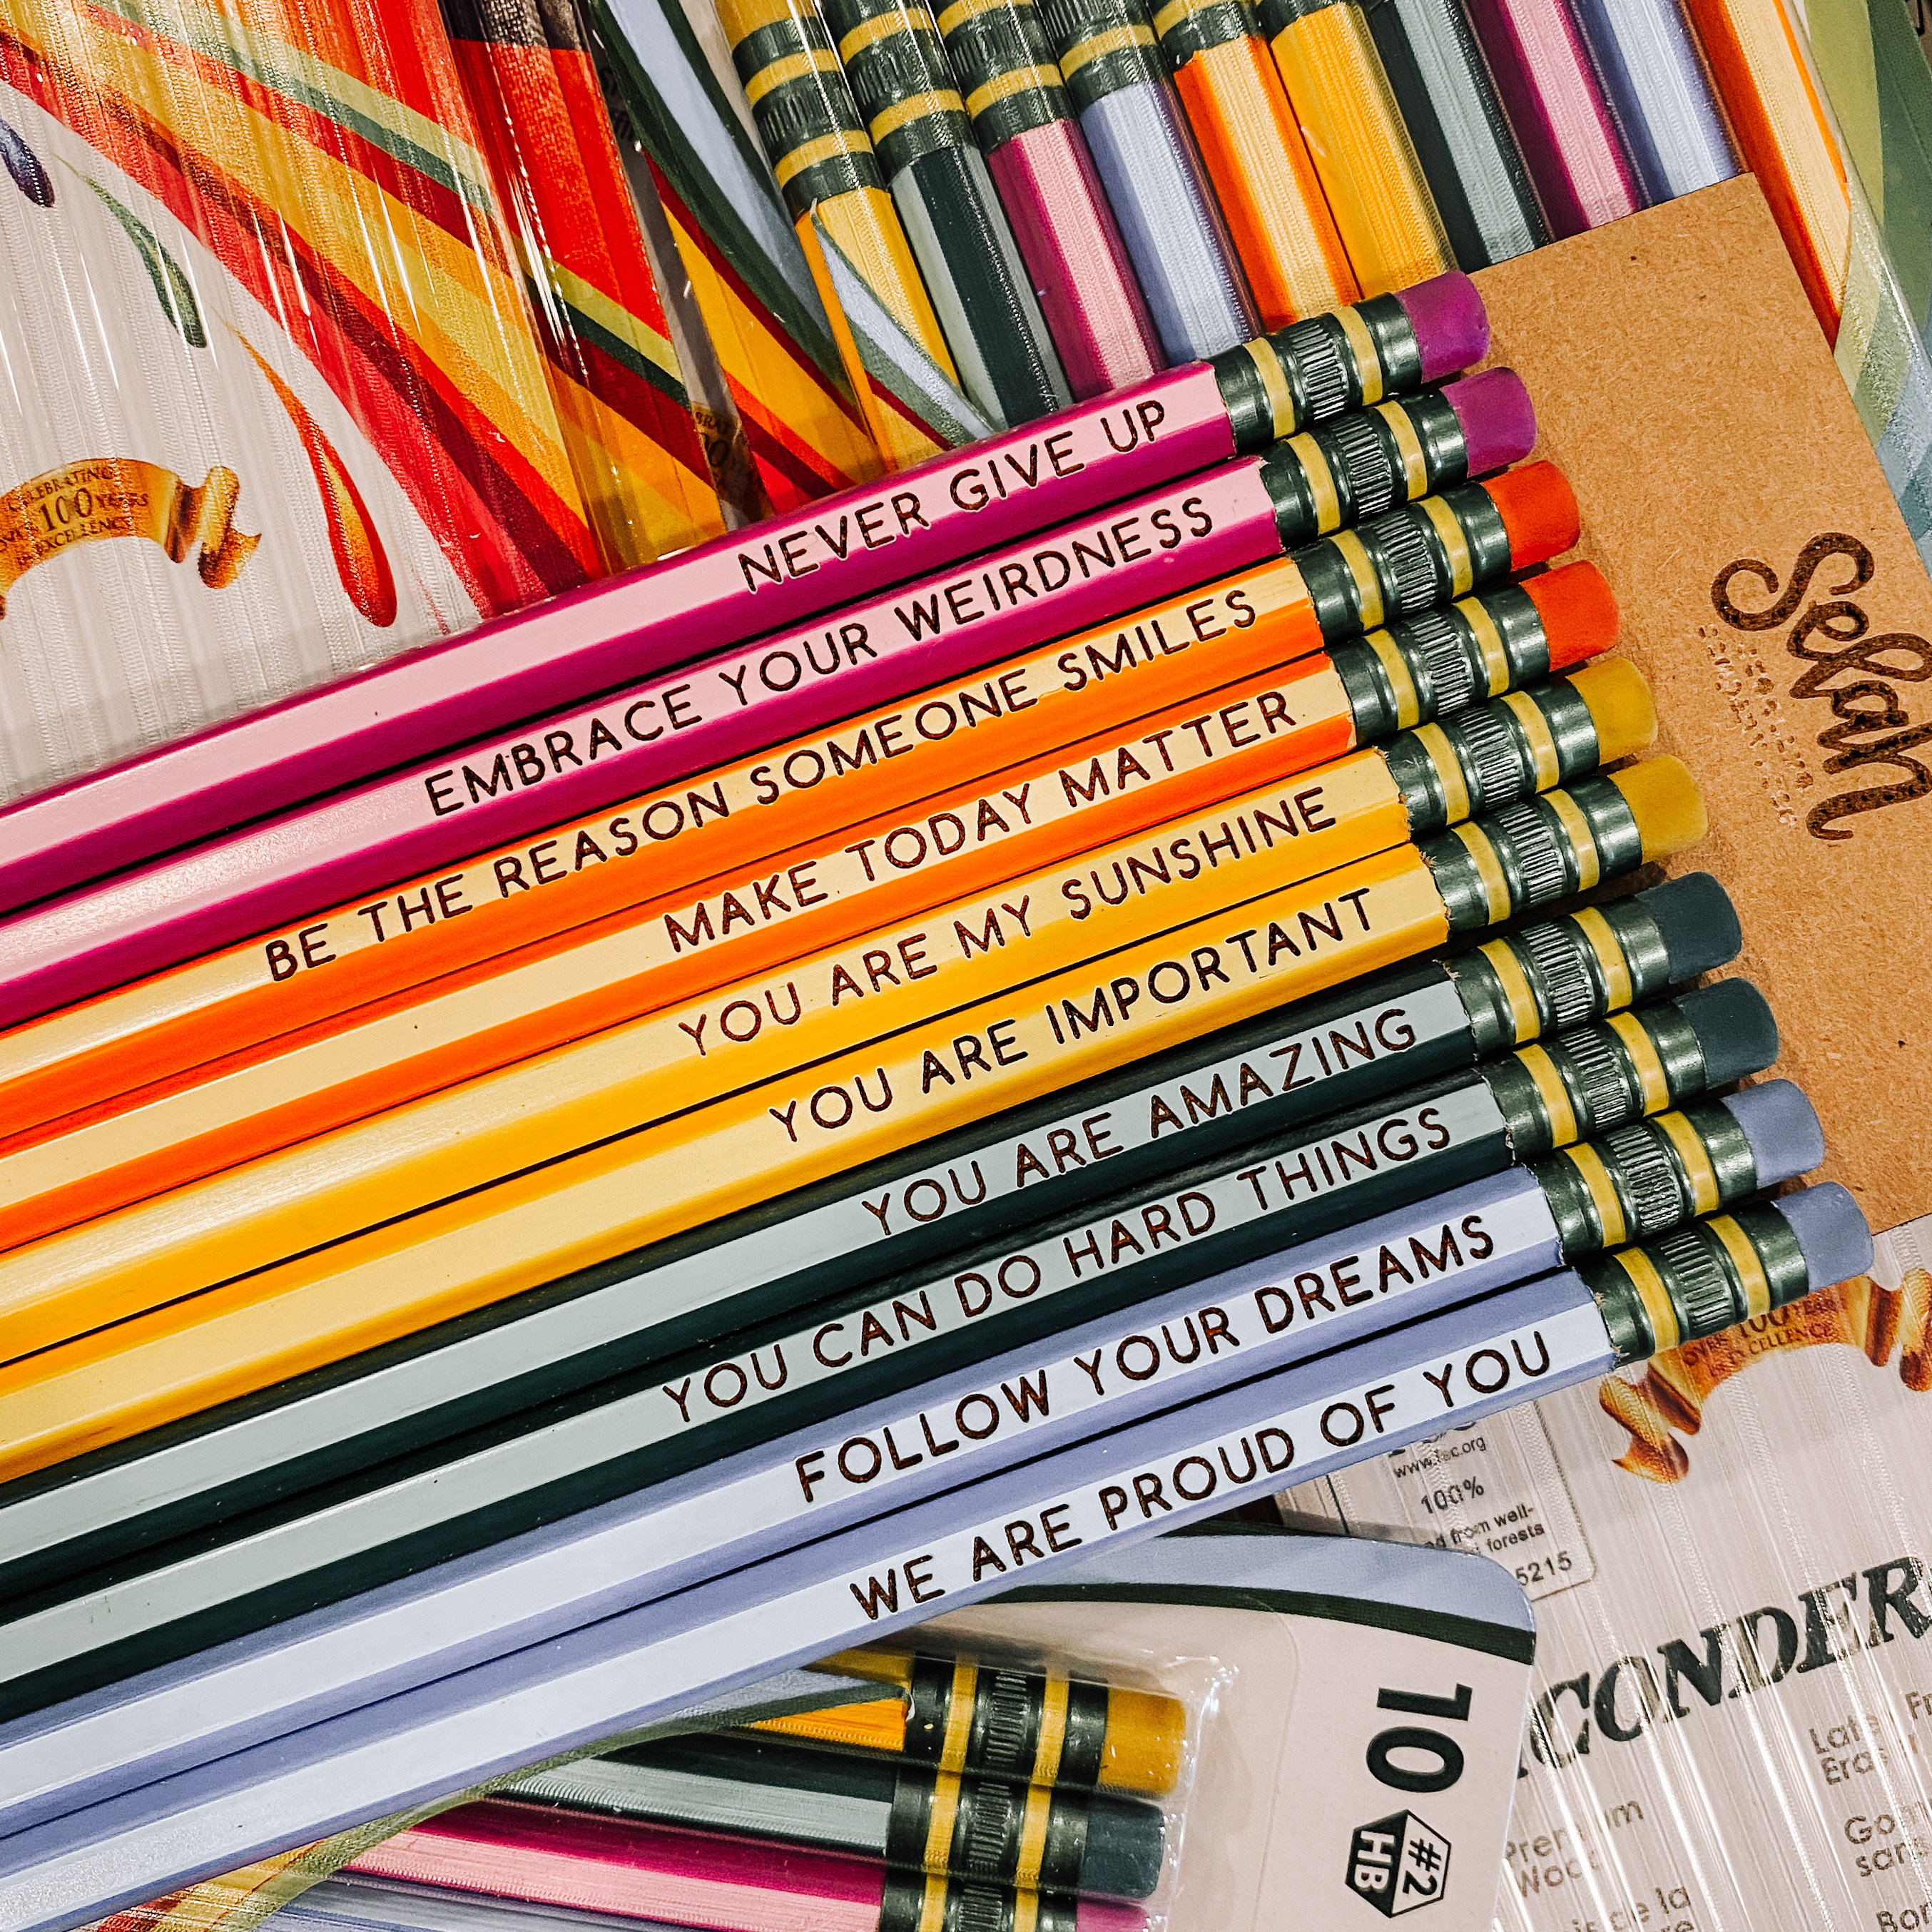 Valentine Hug From Your Teacher Pencils - 12 pencils